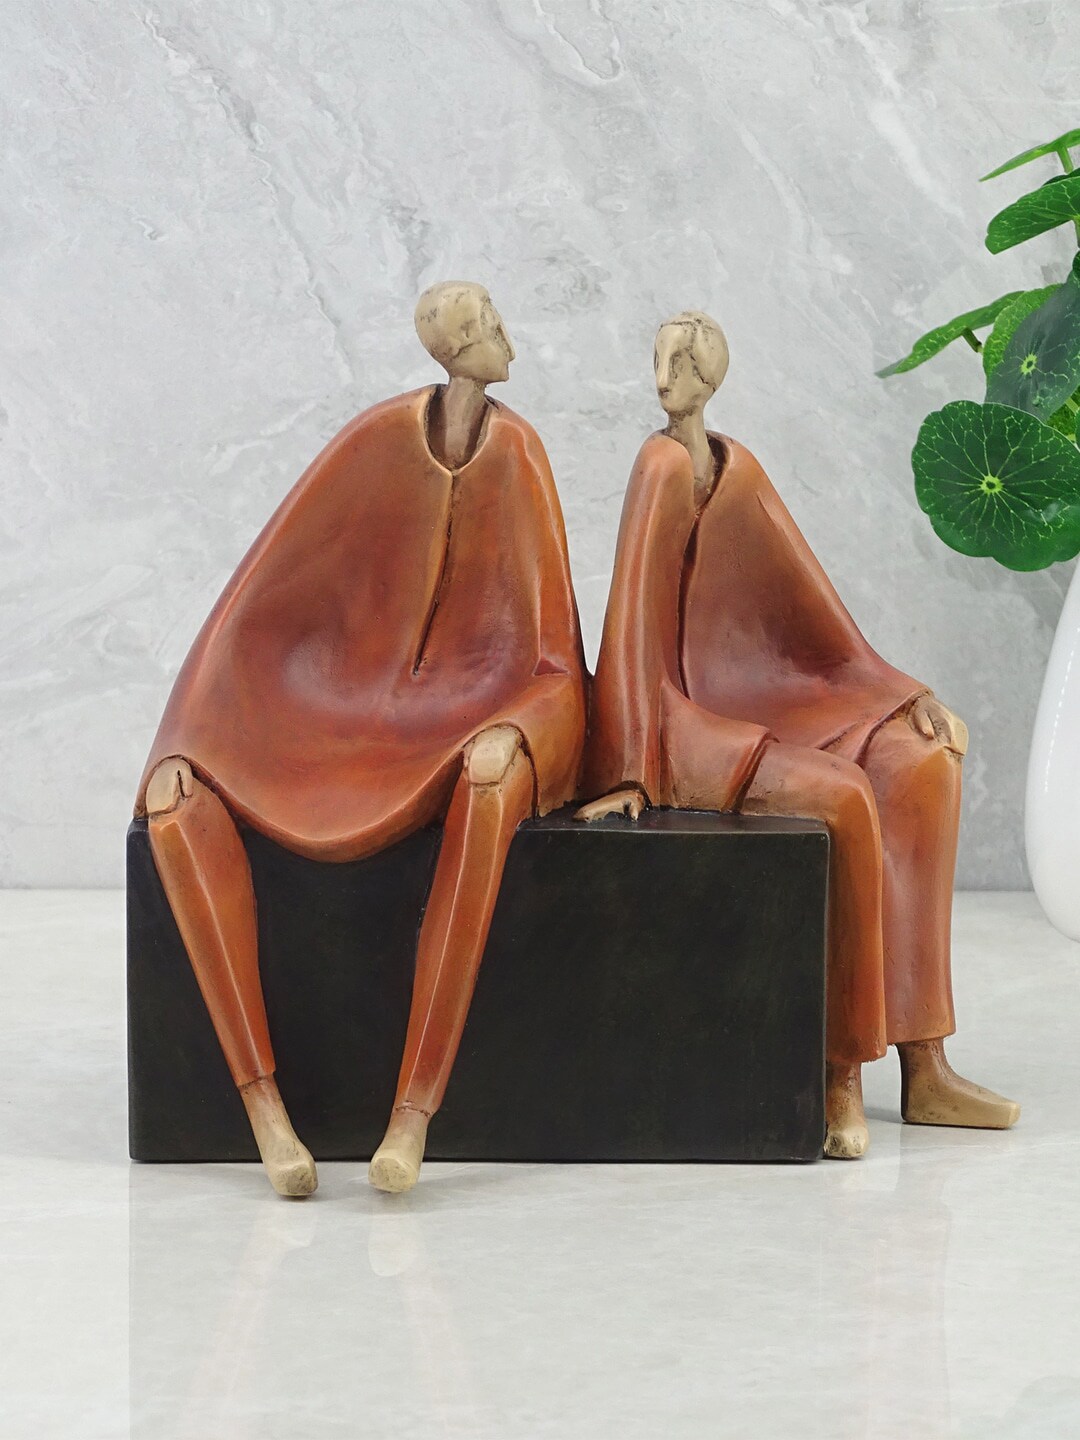 HomeTown Unisex Brown & Black Polyresin Figurine Showpieces Price in India